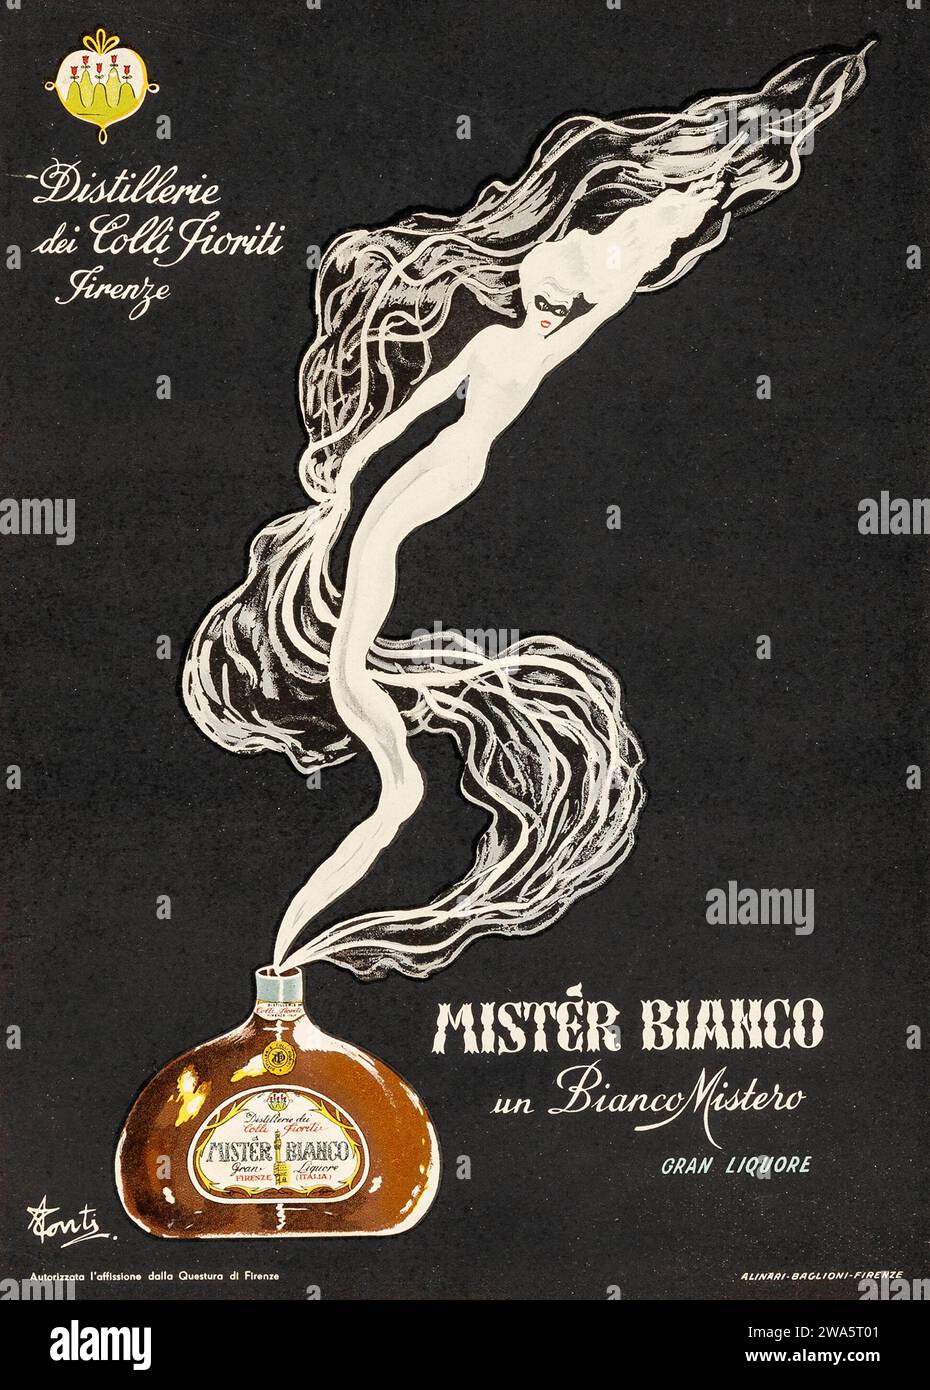 Mister Bianco un Bianco Mistero Gran Liquore (1930s) Advertising Poster Stock Photo